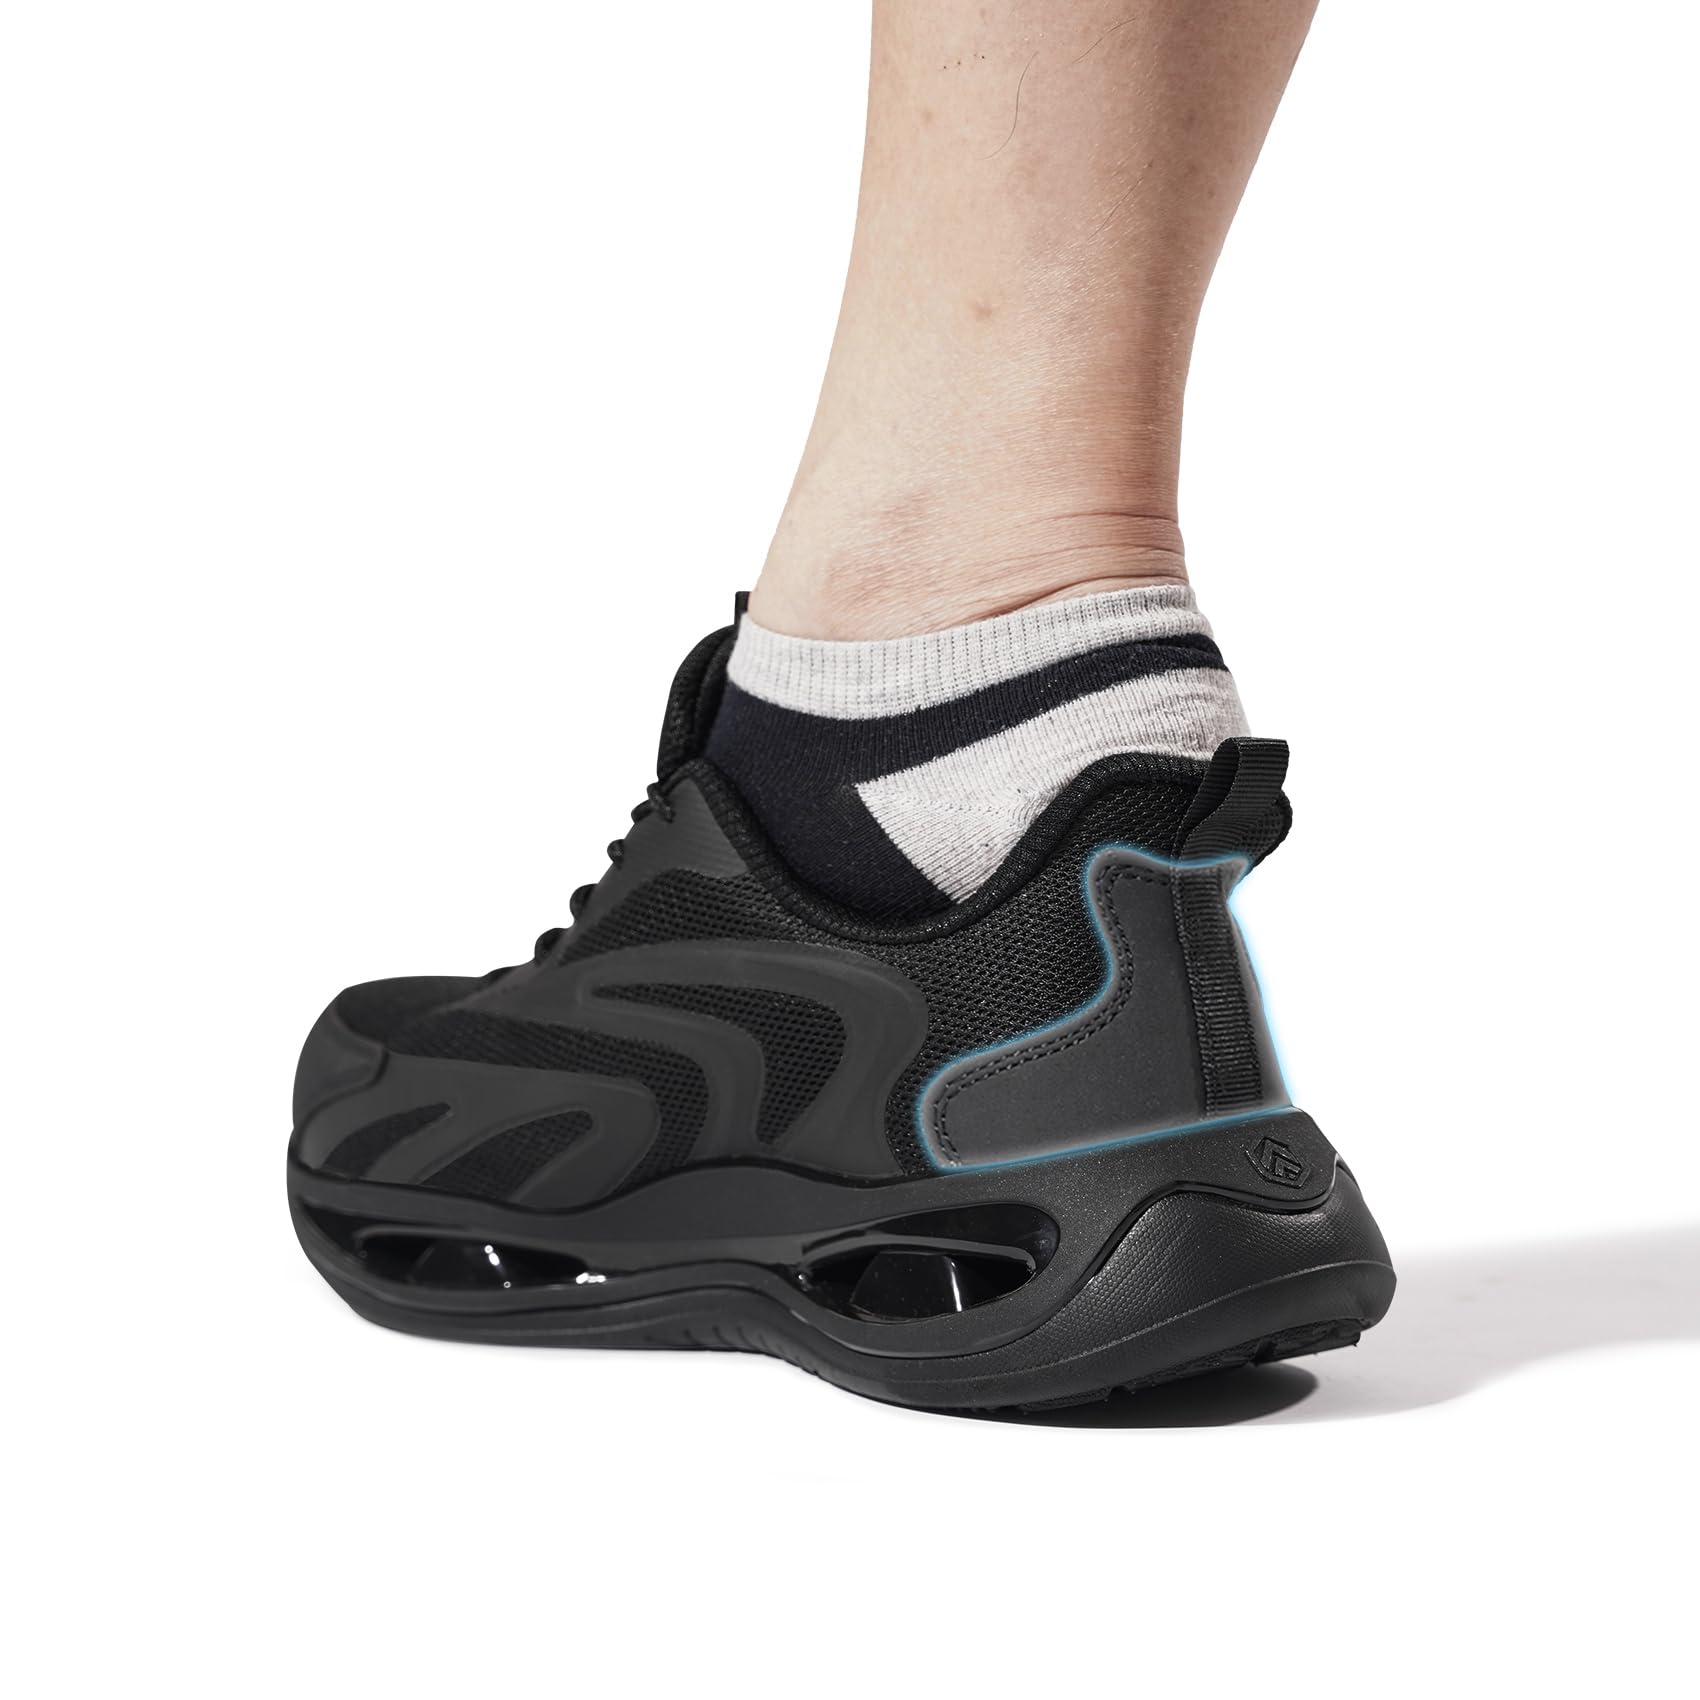 LARNMERN Steel Toe Sneakers Comfortable Men Slip On Work Safety Shoes Lightweight Shoe Infinity PRO Series